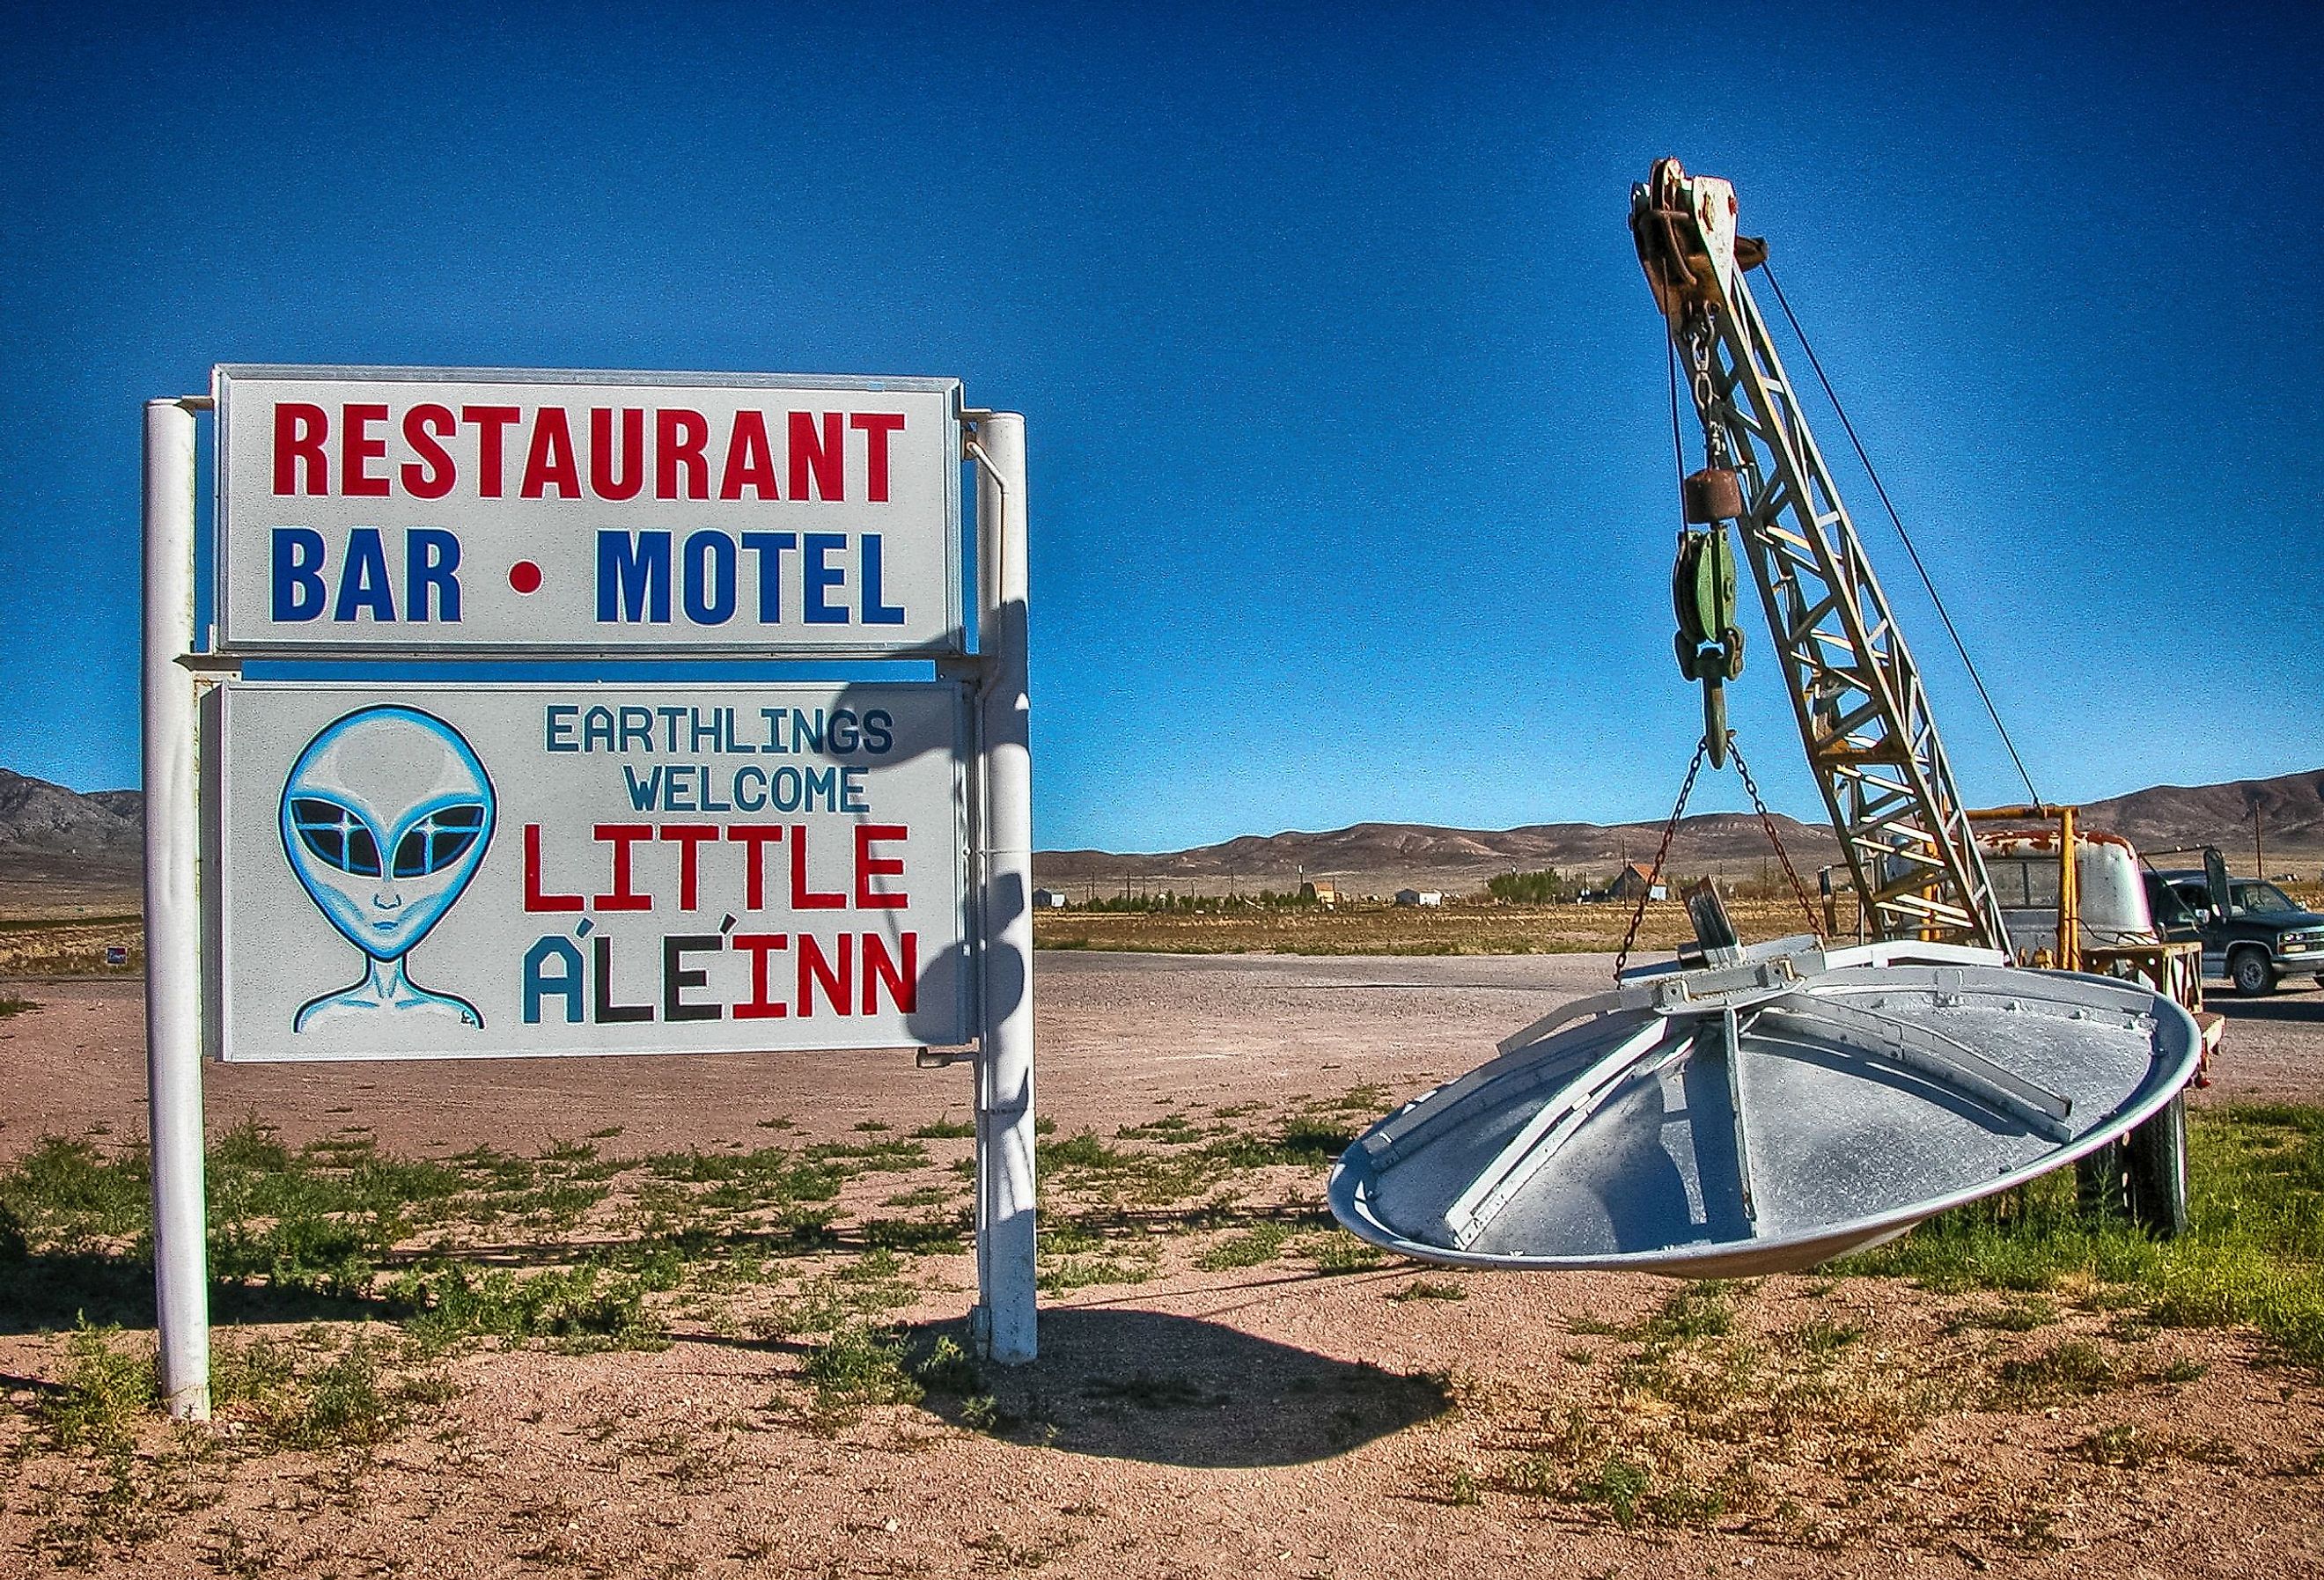 Restaurant and gift shop near Area 51 in Rachel, Nevada. Image credit GagliardiPhotography via Shutterstock